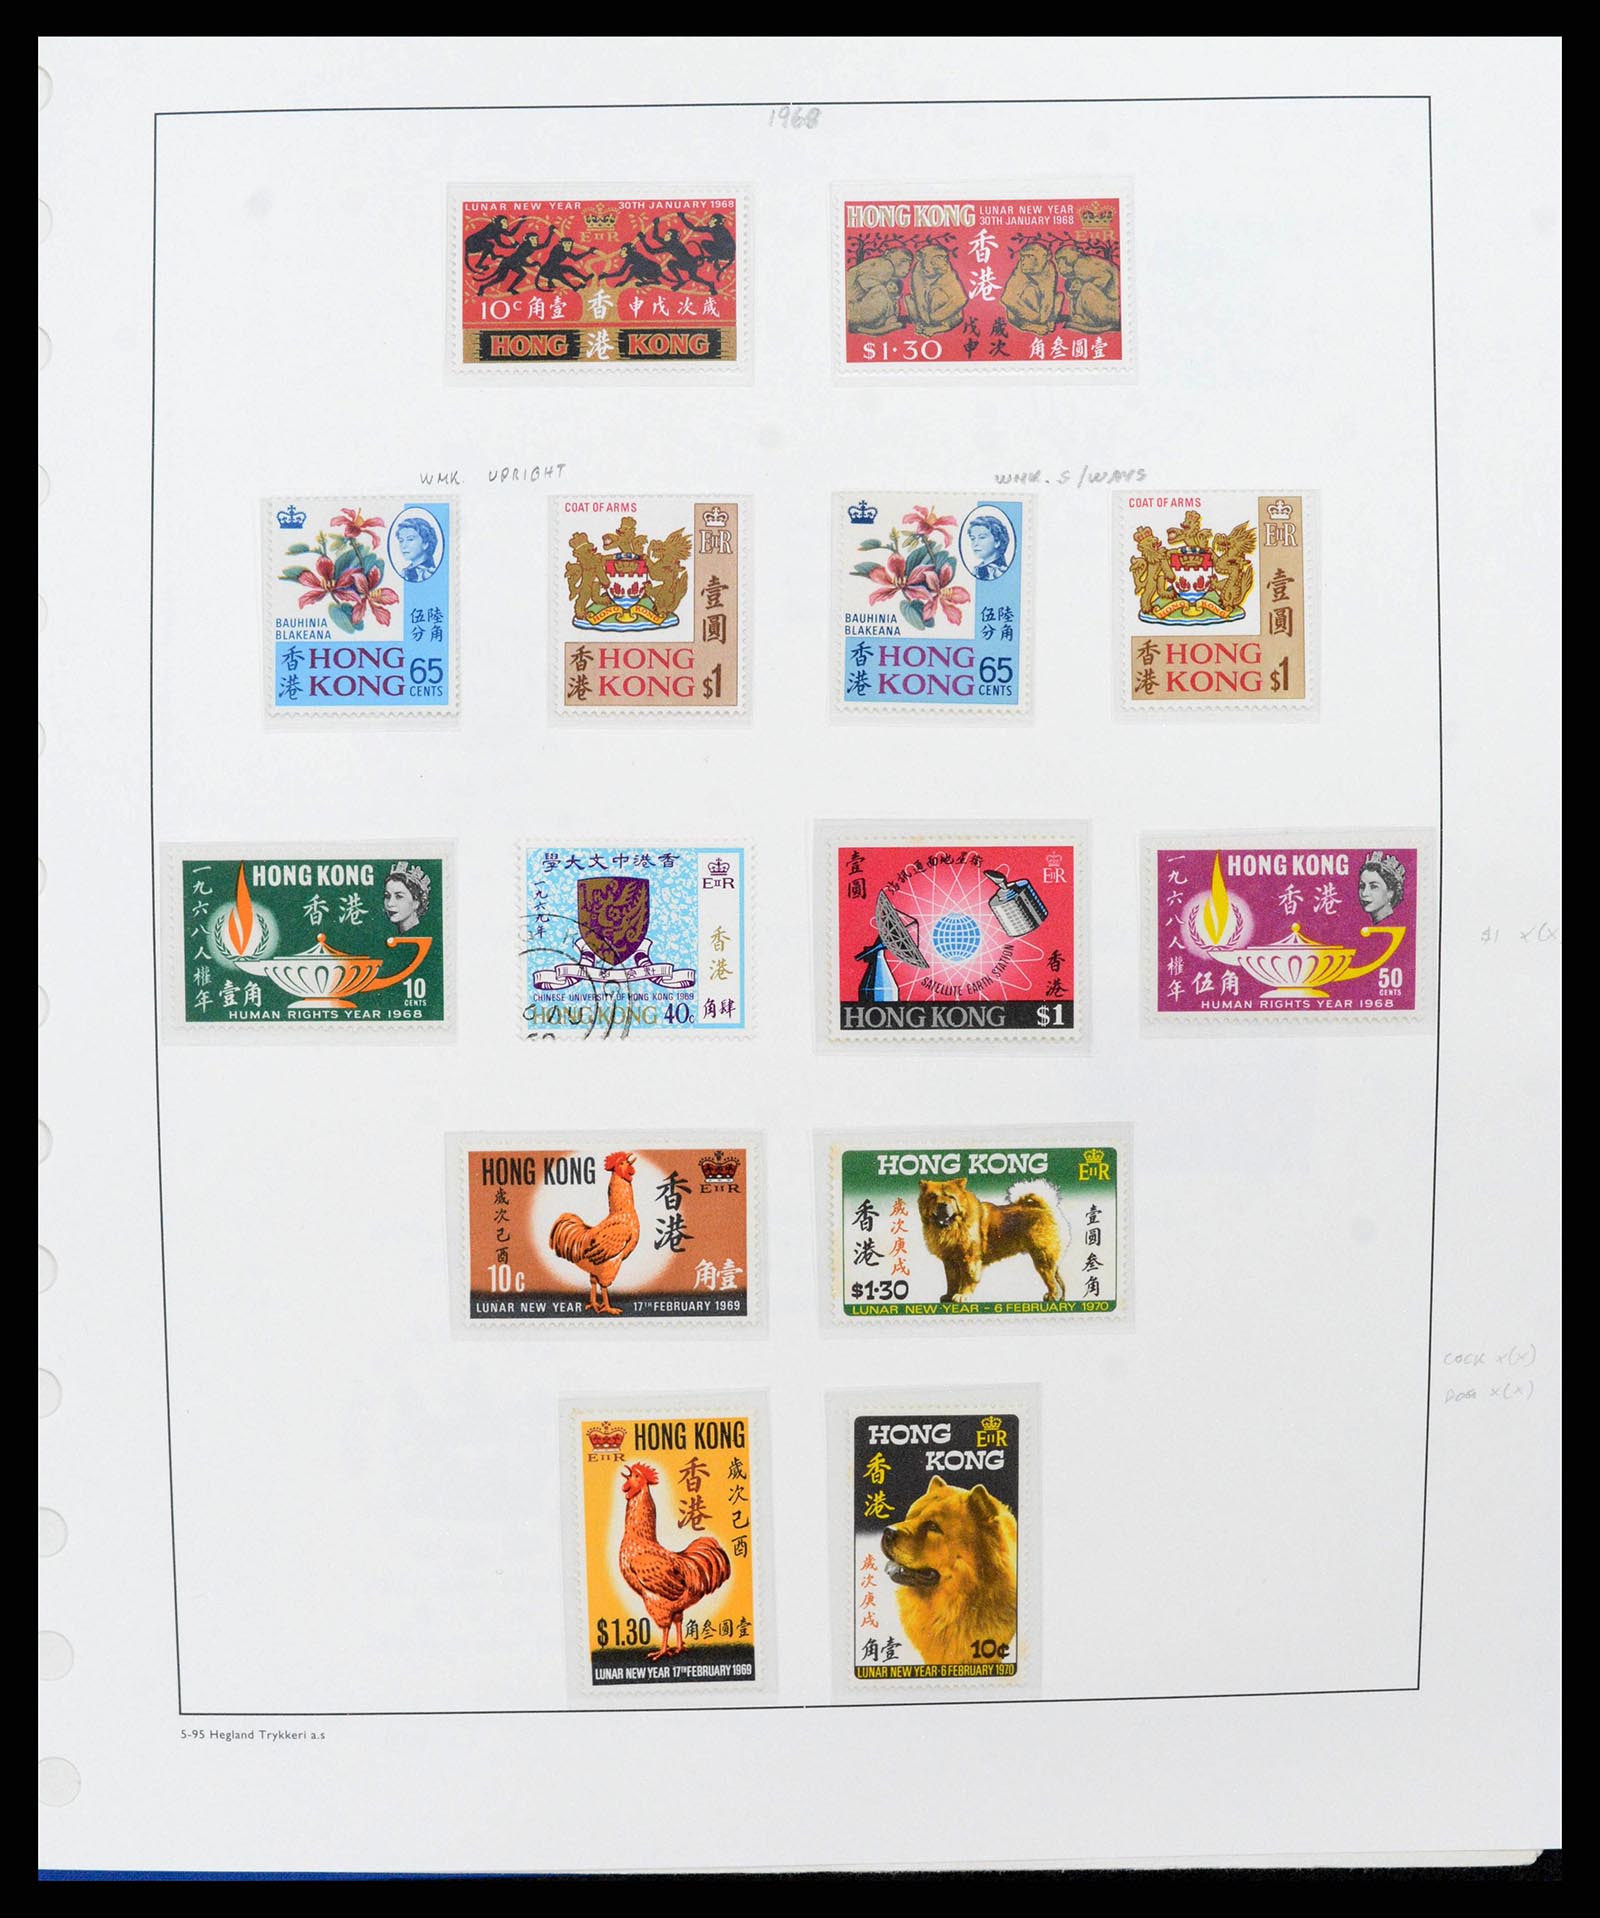 37955 0057 - Stamp collection 37955 Hong Kong supercollection 1862-2007.